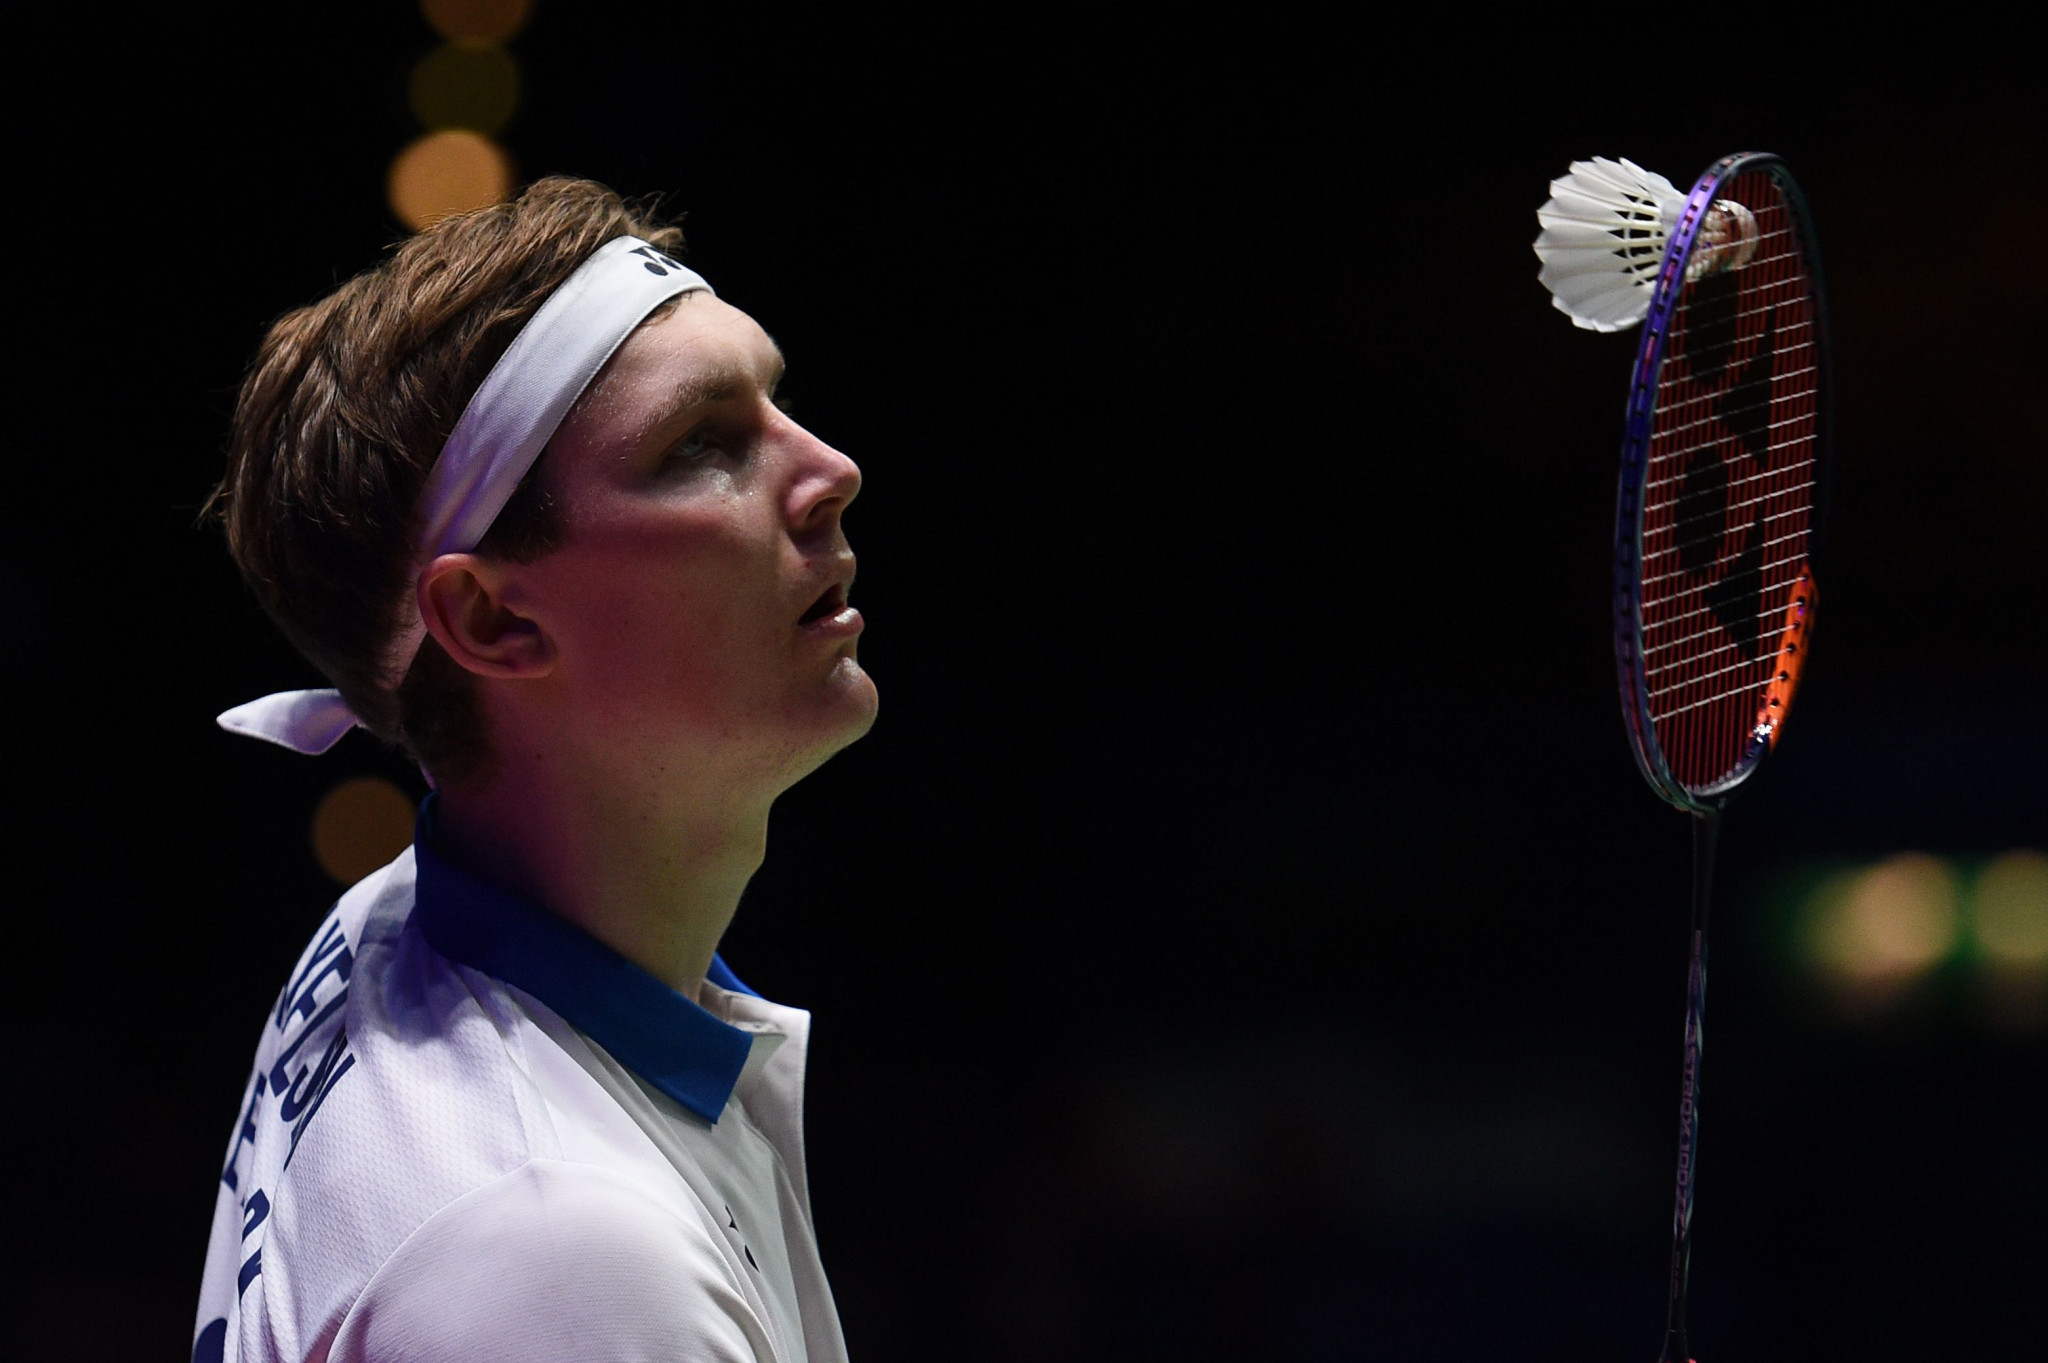 Viktor Axelsen reached the men's singles quarter-finals ©Getty Images